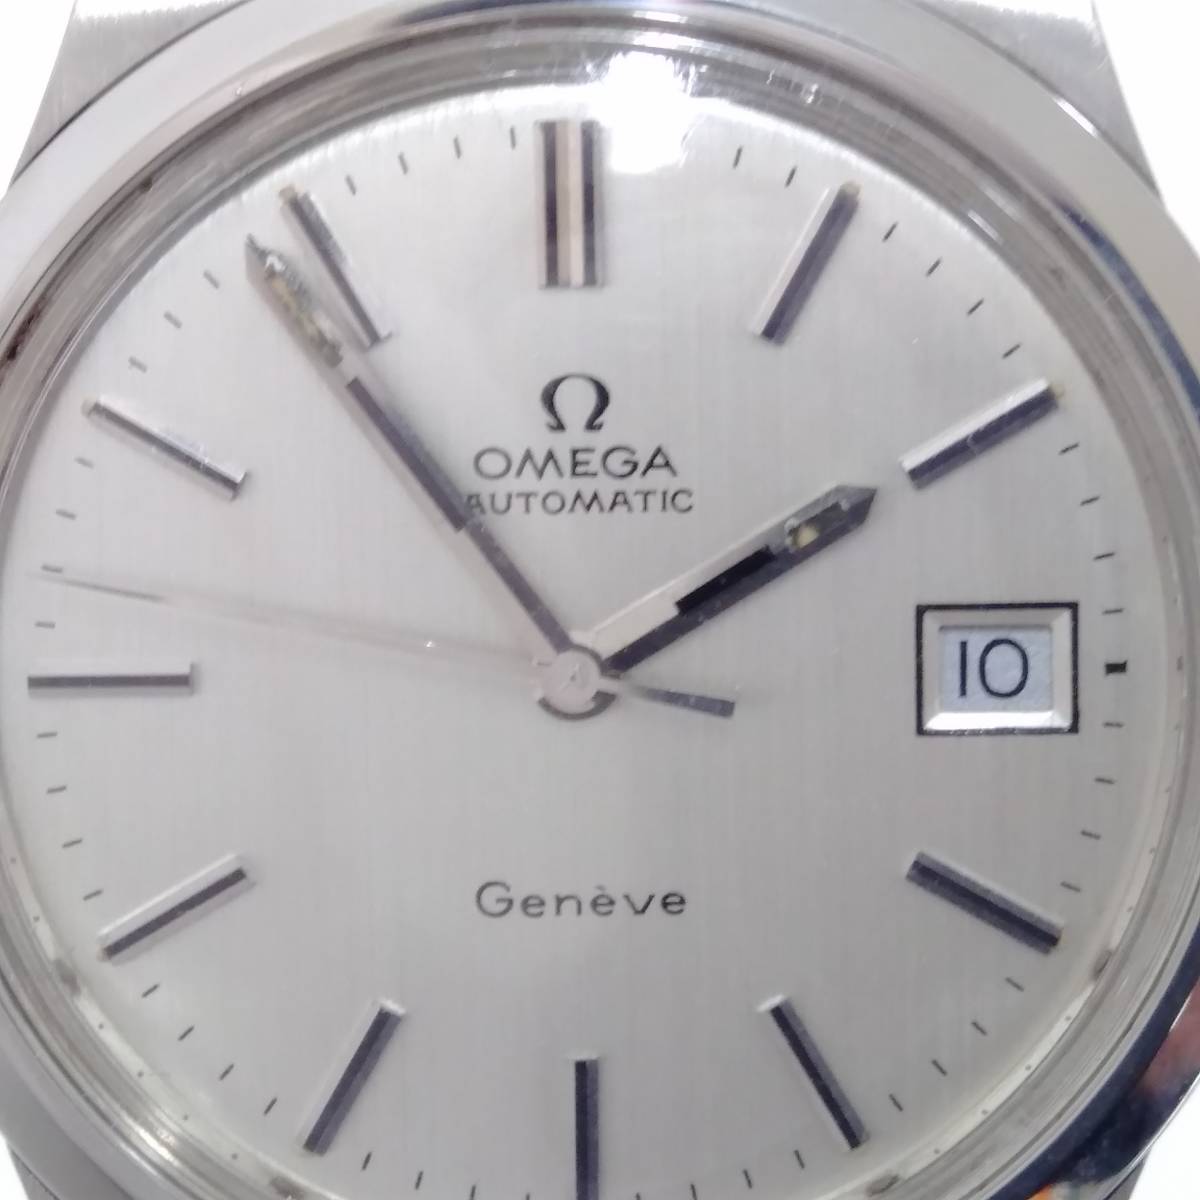 OMEGA オメガ Geneve ジュネーブ 166.0173 腕時計 自動巻き_画像6